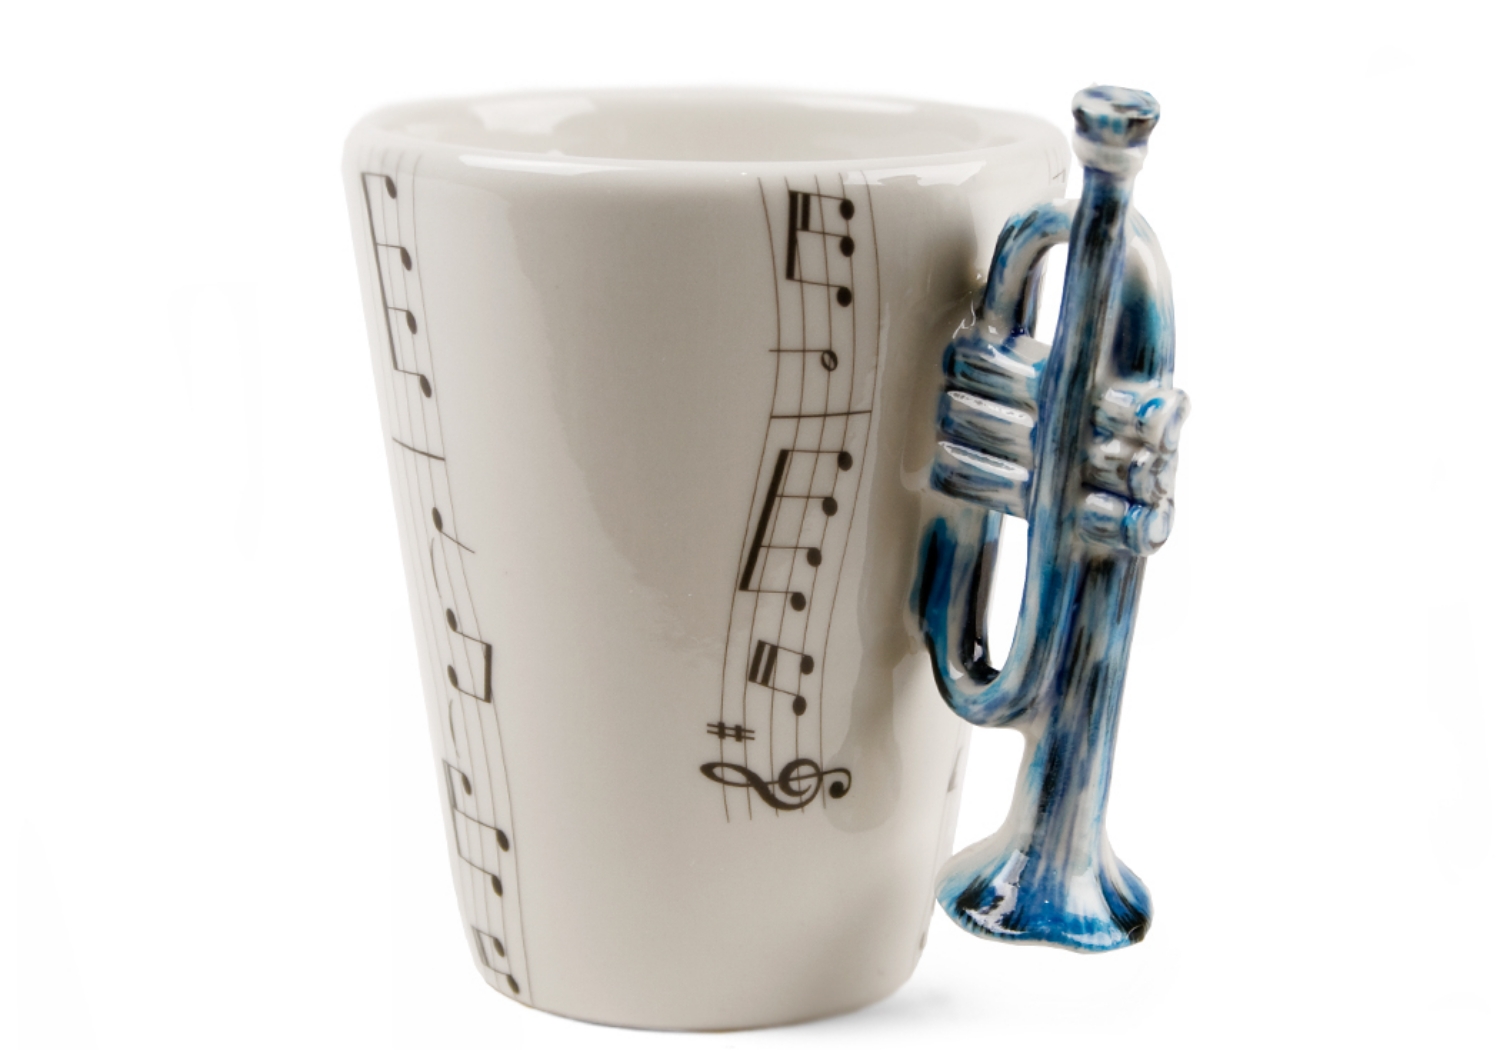 Trumpet Coffee Mug